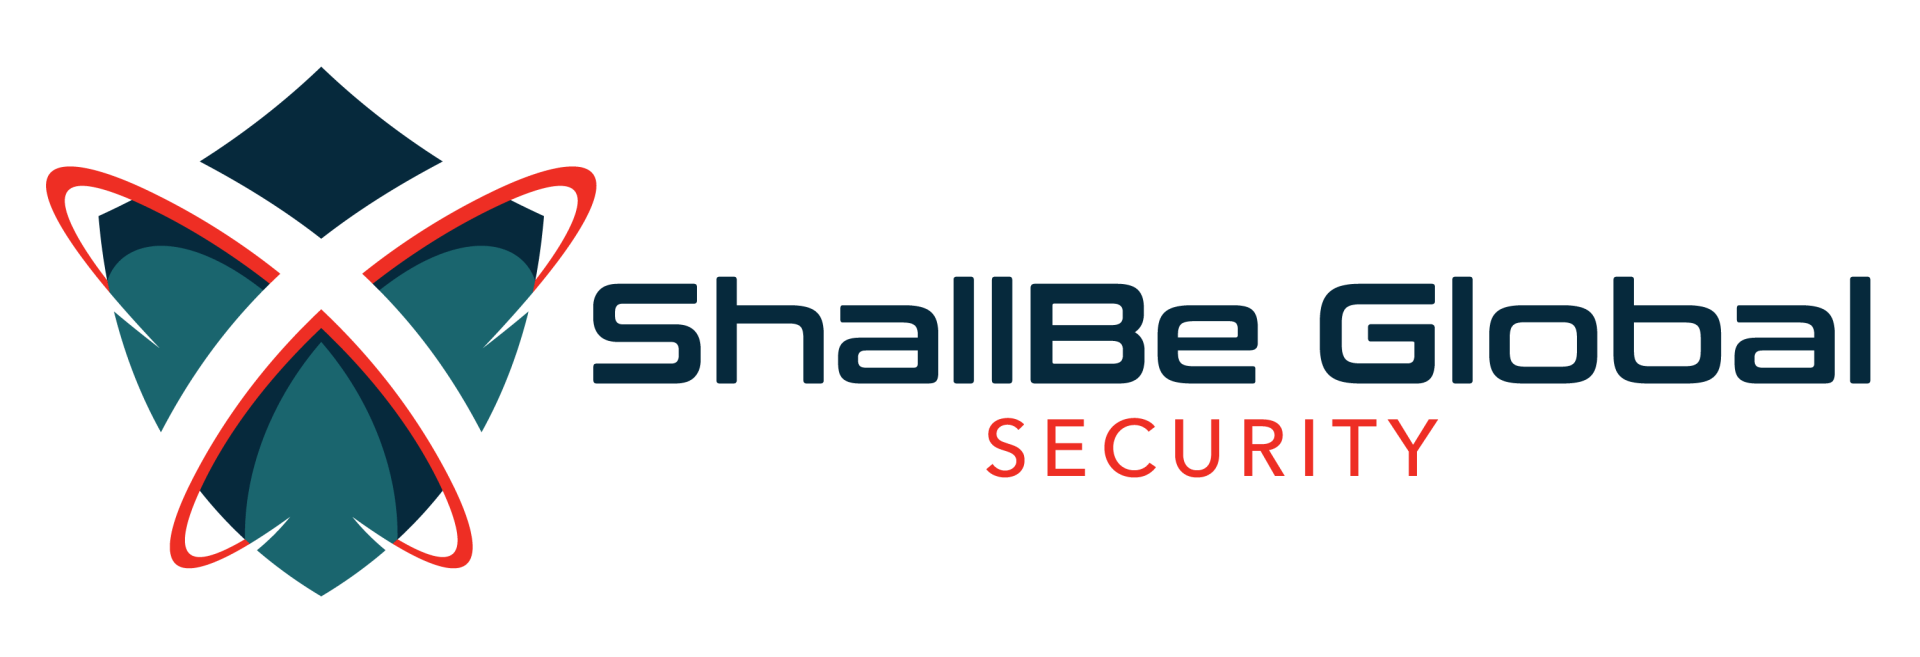 ShallBe Global Security